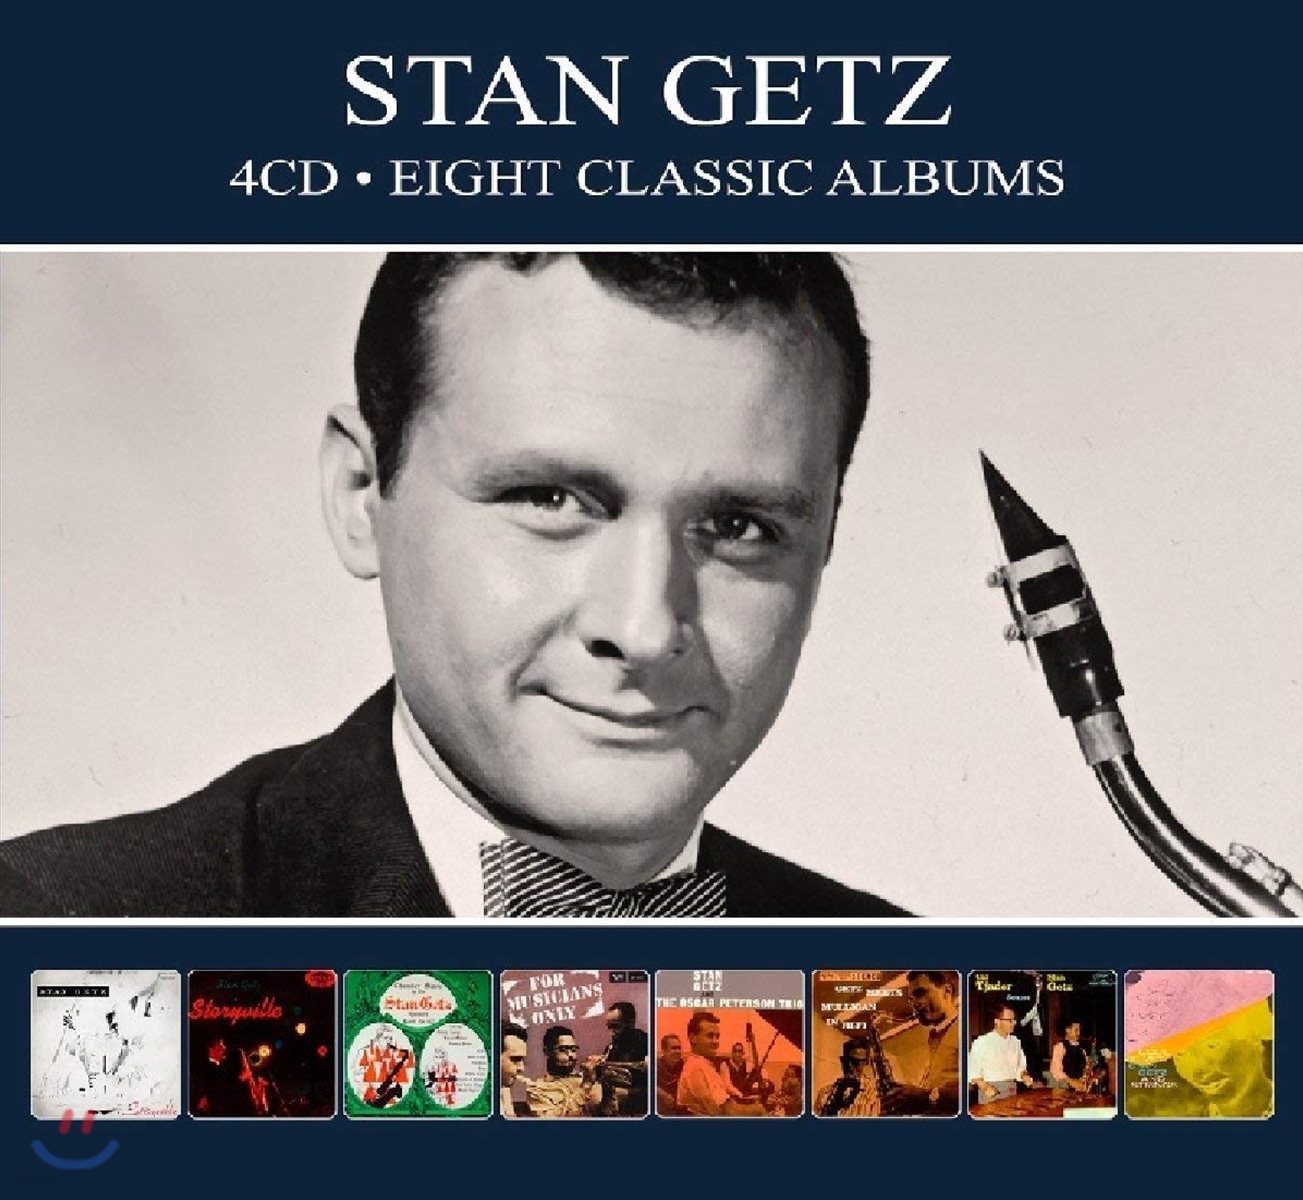 Stan Getz (스탄 게츠) - 8 Classic Albums